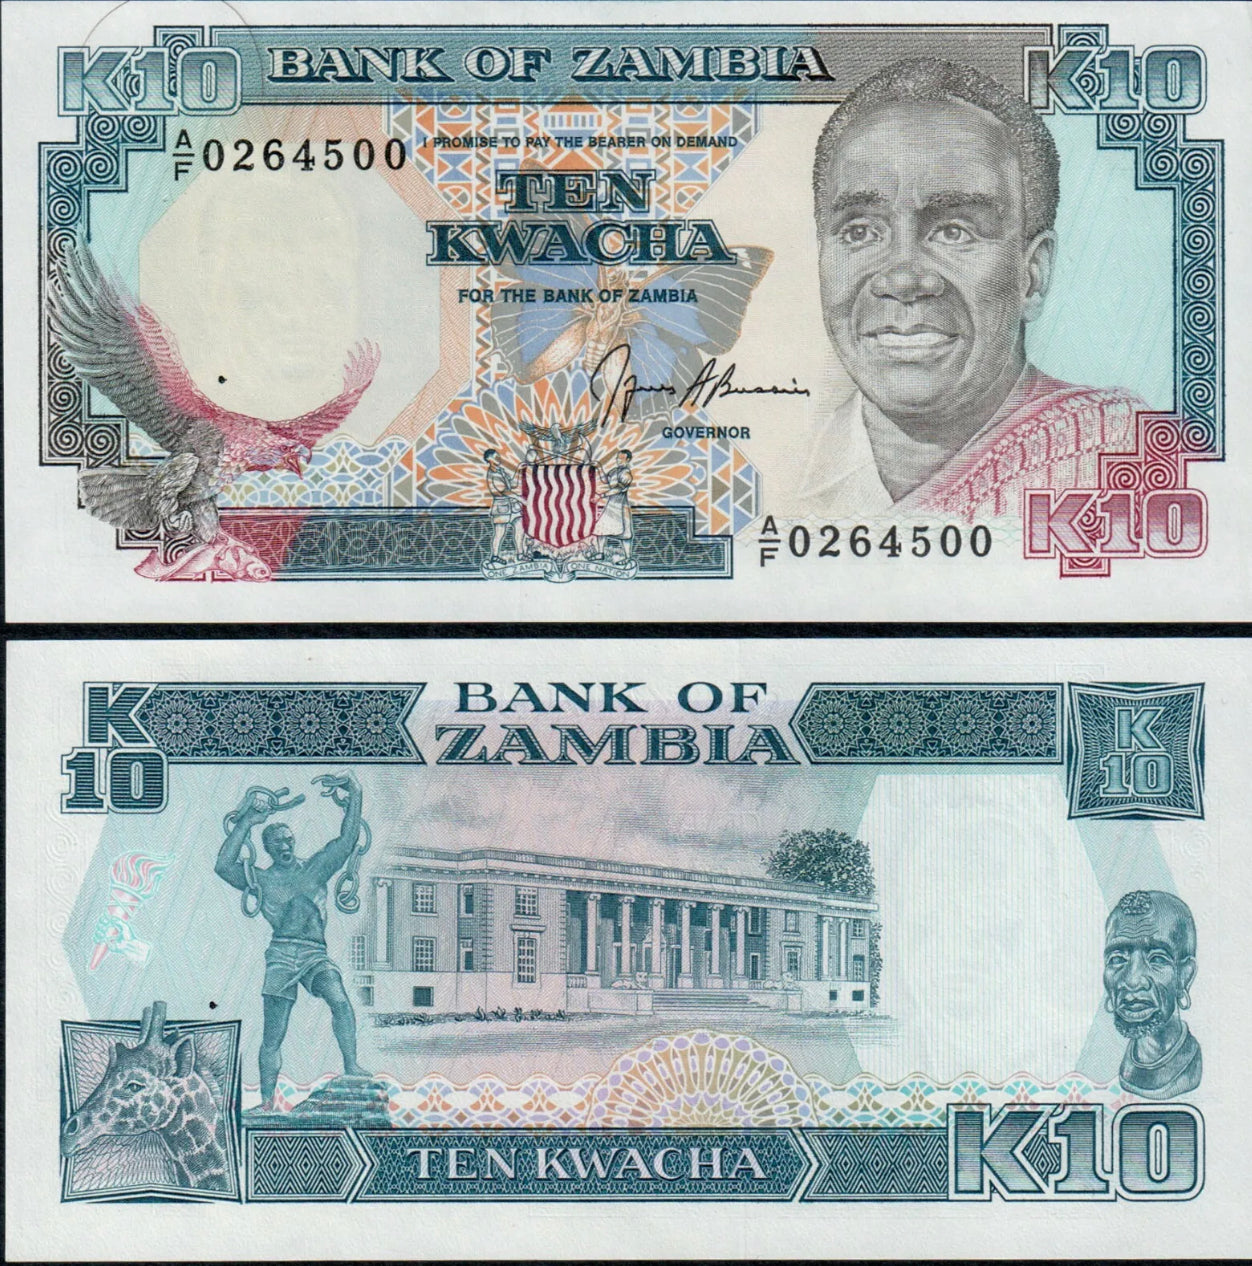 ZAMBIA 10 KWACHA (P31b) N. D. (1989-91) UNC